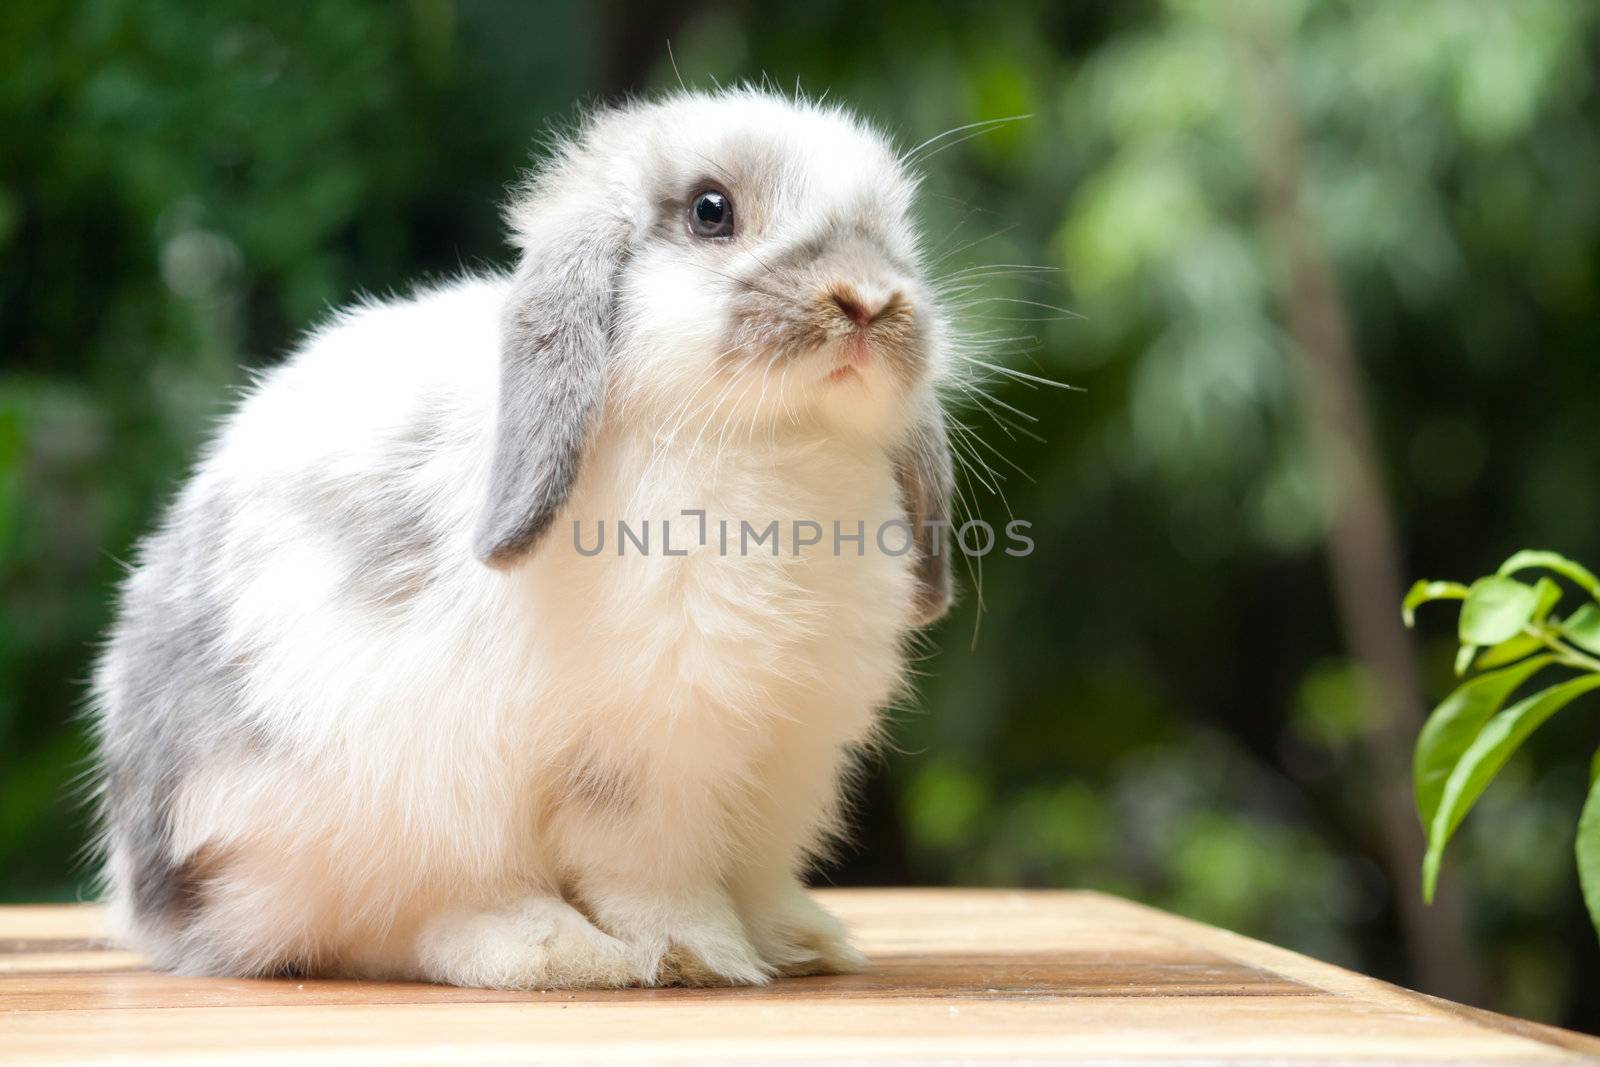 Cute rabbit standing at outdoor